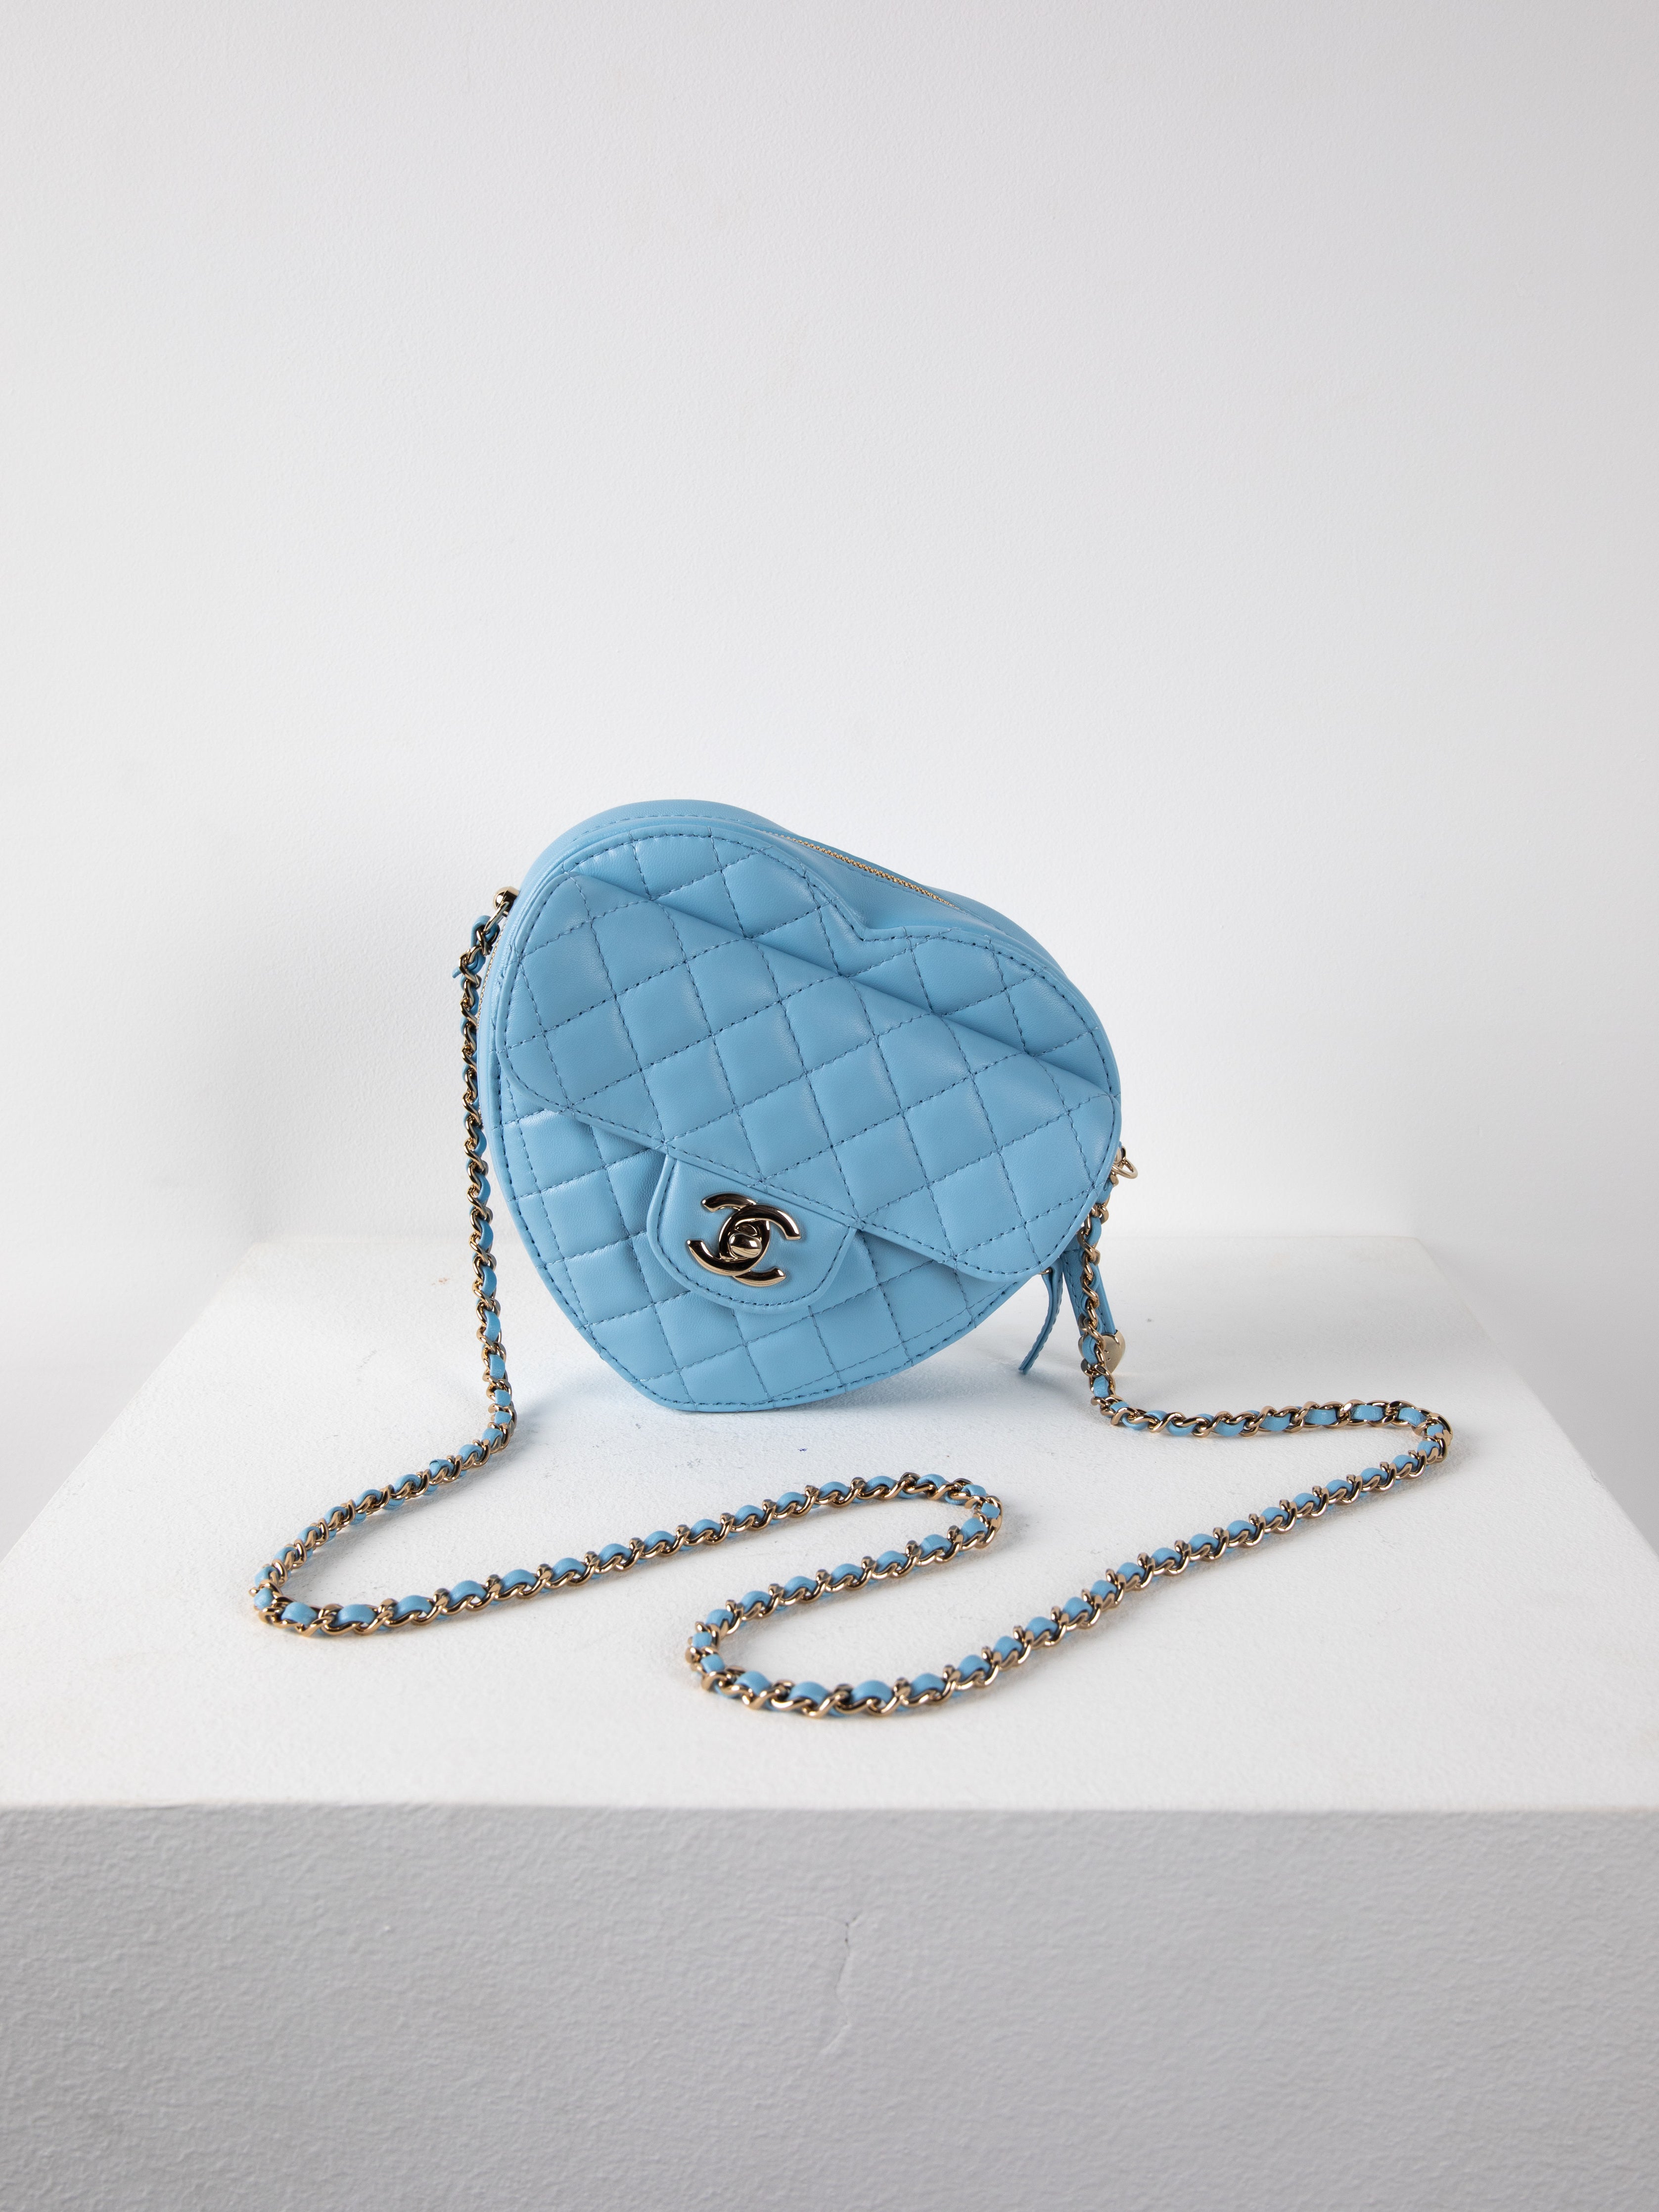 Chanel Spring-Summer 2022 Heart Bag in blue